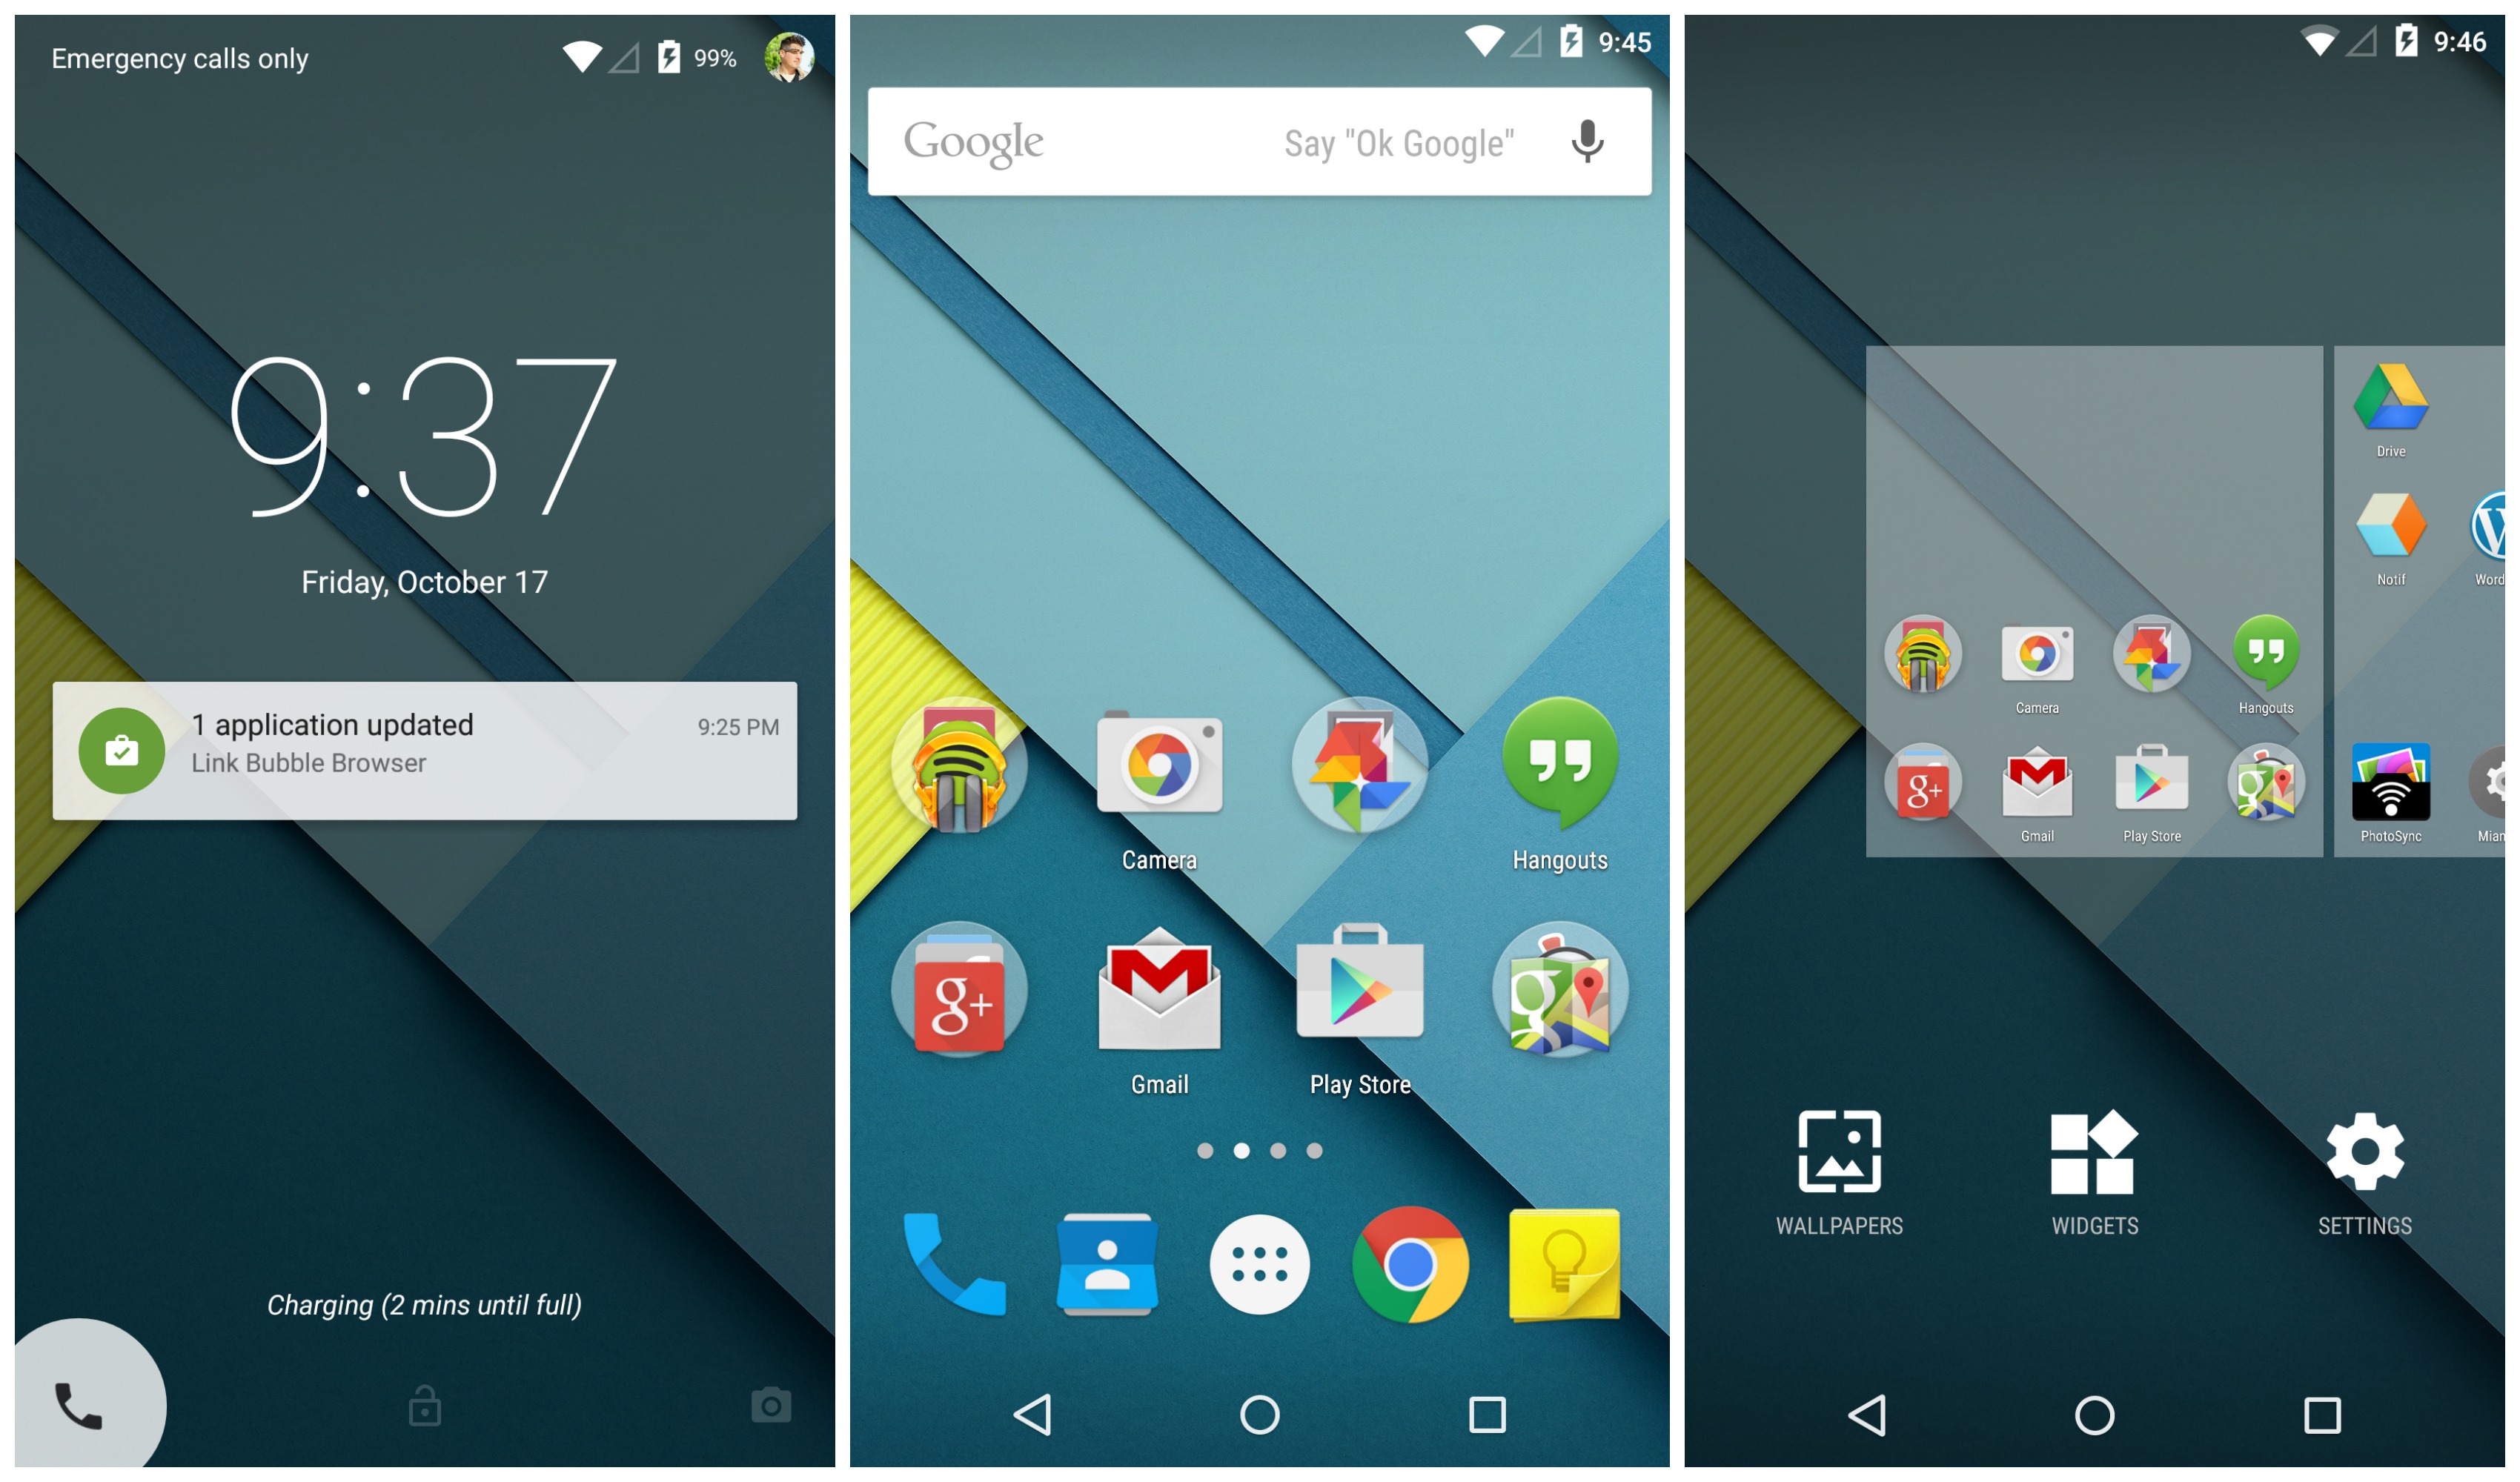 V 2.0 apk. Android 5.1 Lollipop. Android 5.0 / 5.1 Lollipop. Версия андроид 5.1. Android 5.0 Lollipop 2014.